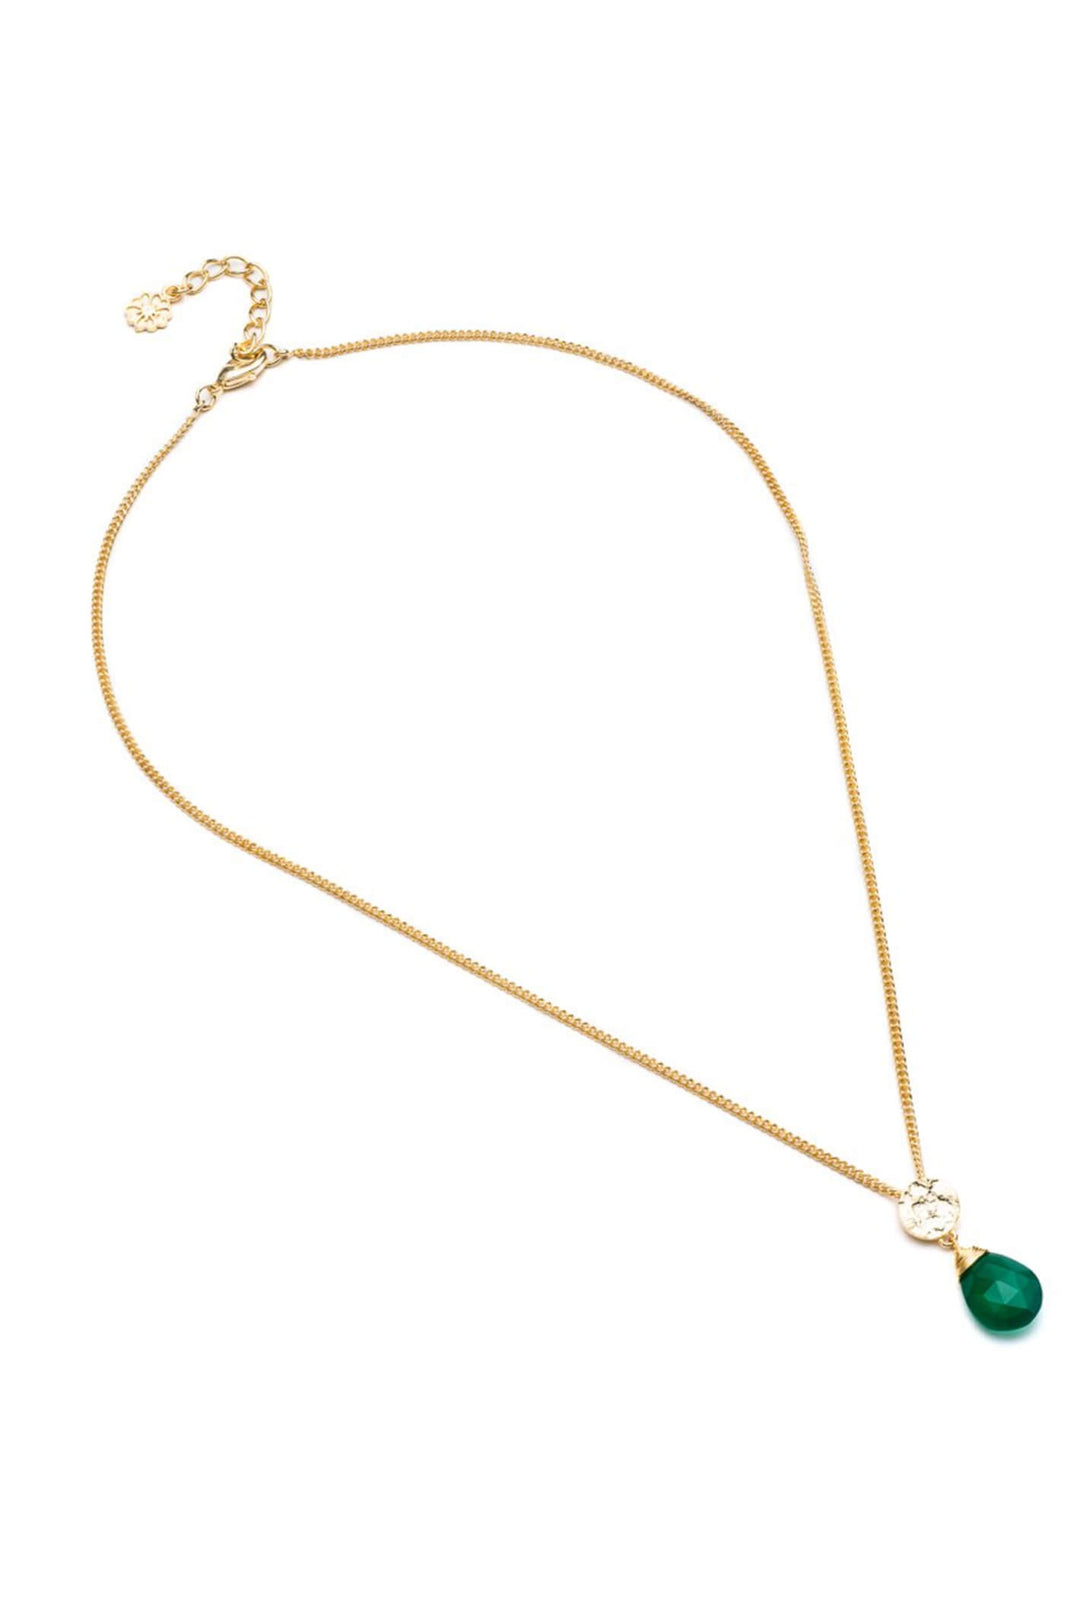 Azuni Classic Athena Green Onyx Necklace - Experience Boutique